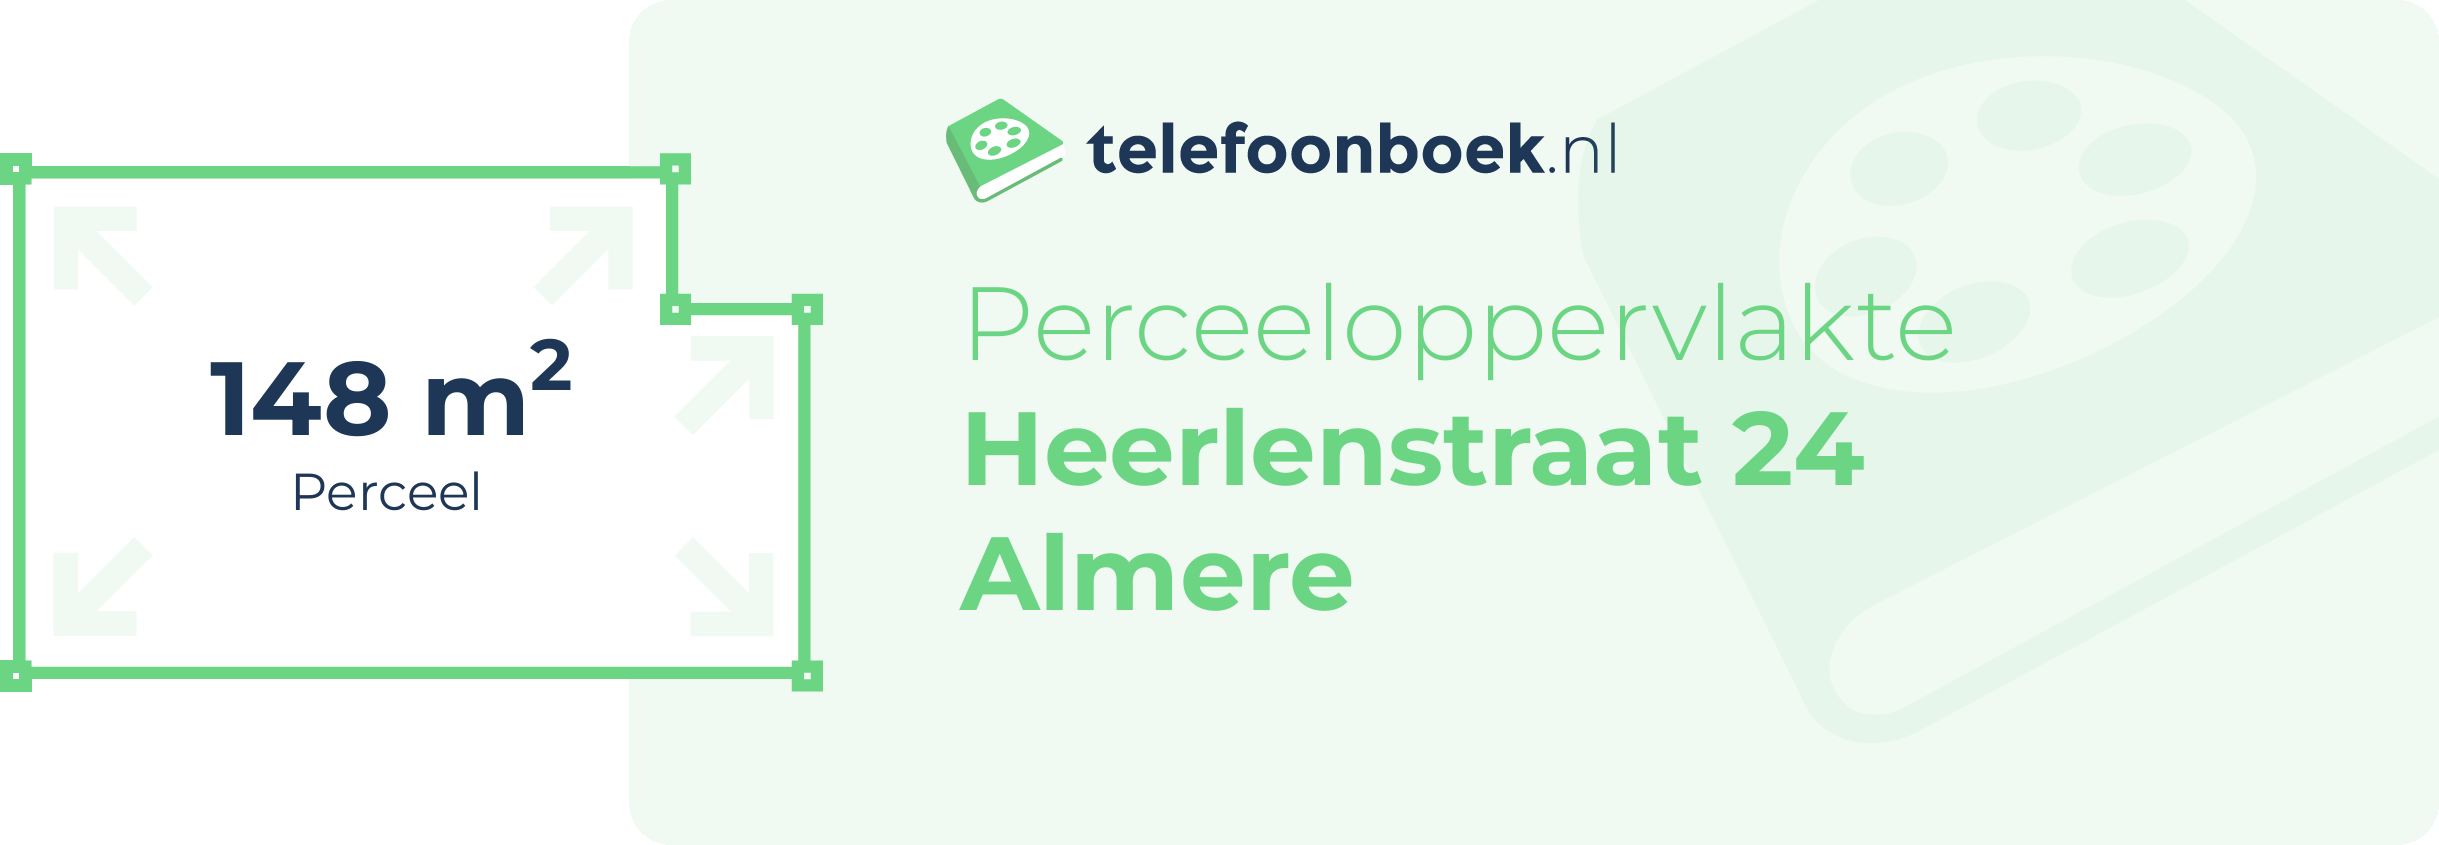 Perceeloppervlakte Heerlenstraat 24 Almere